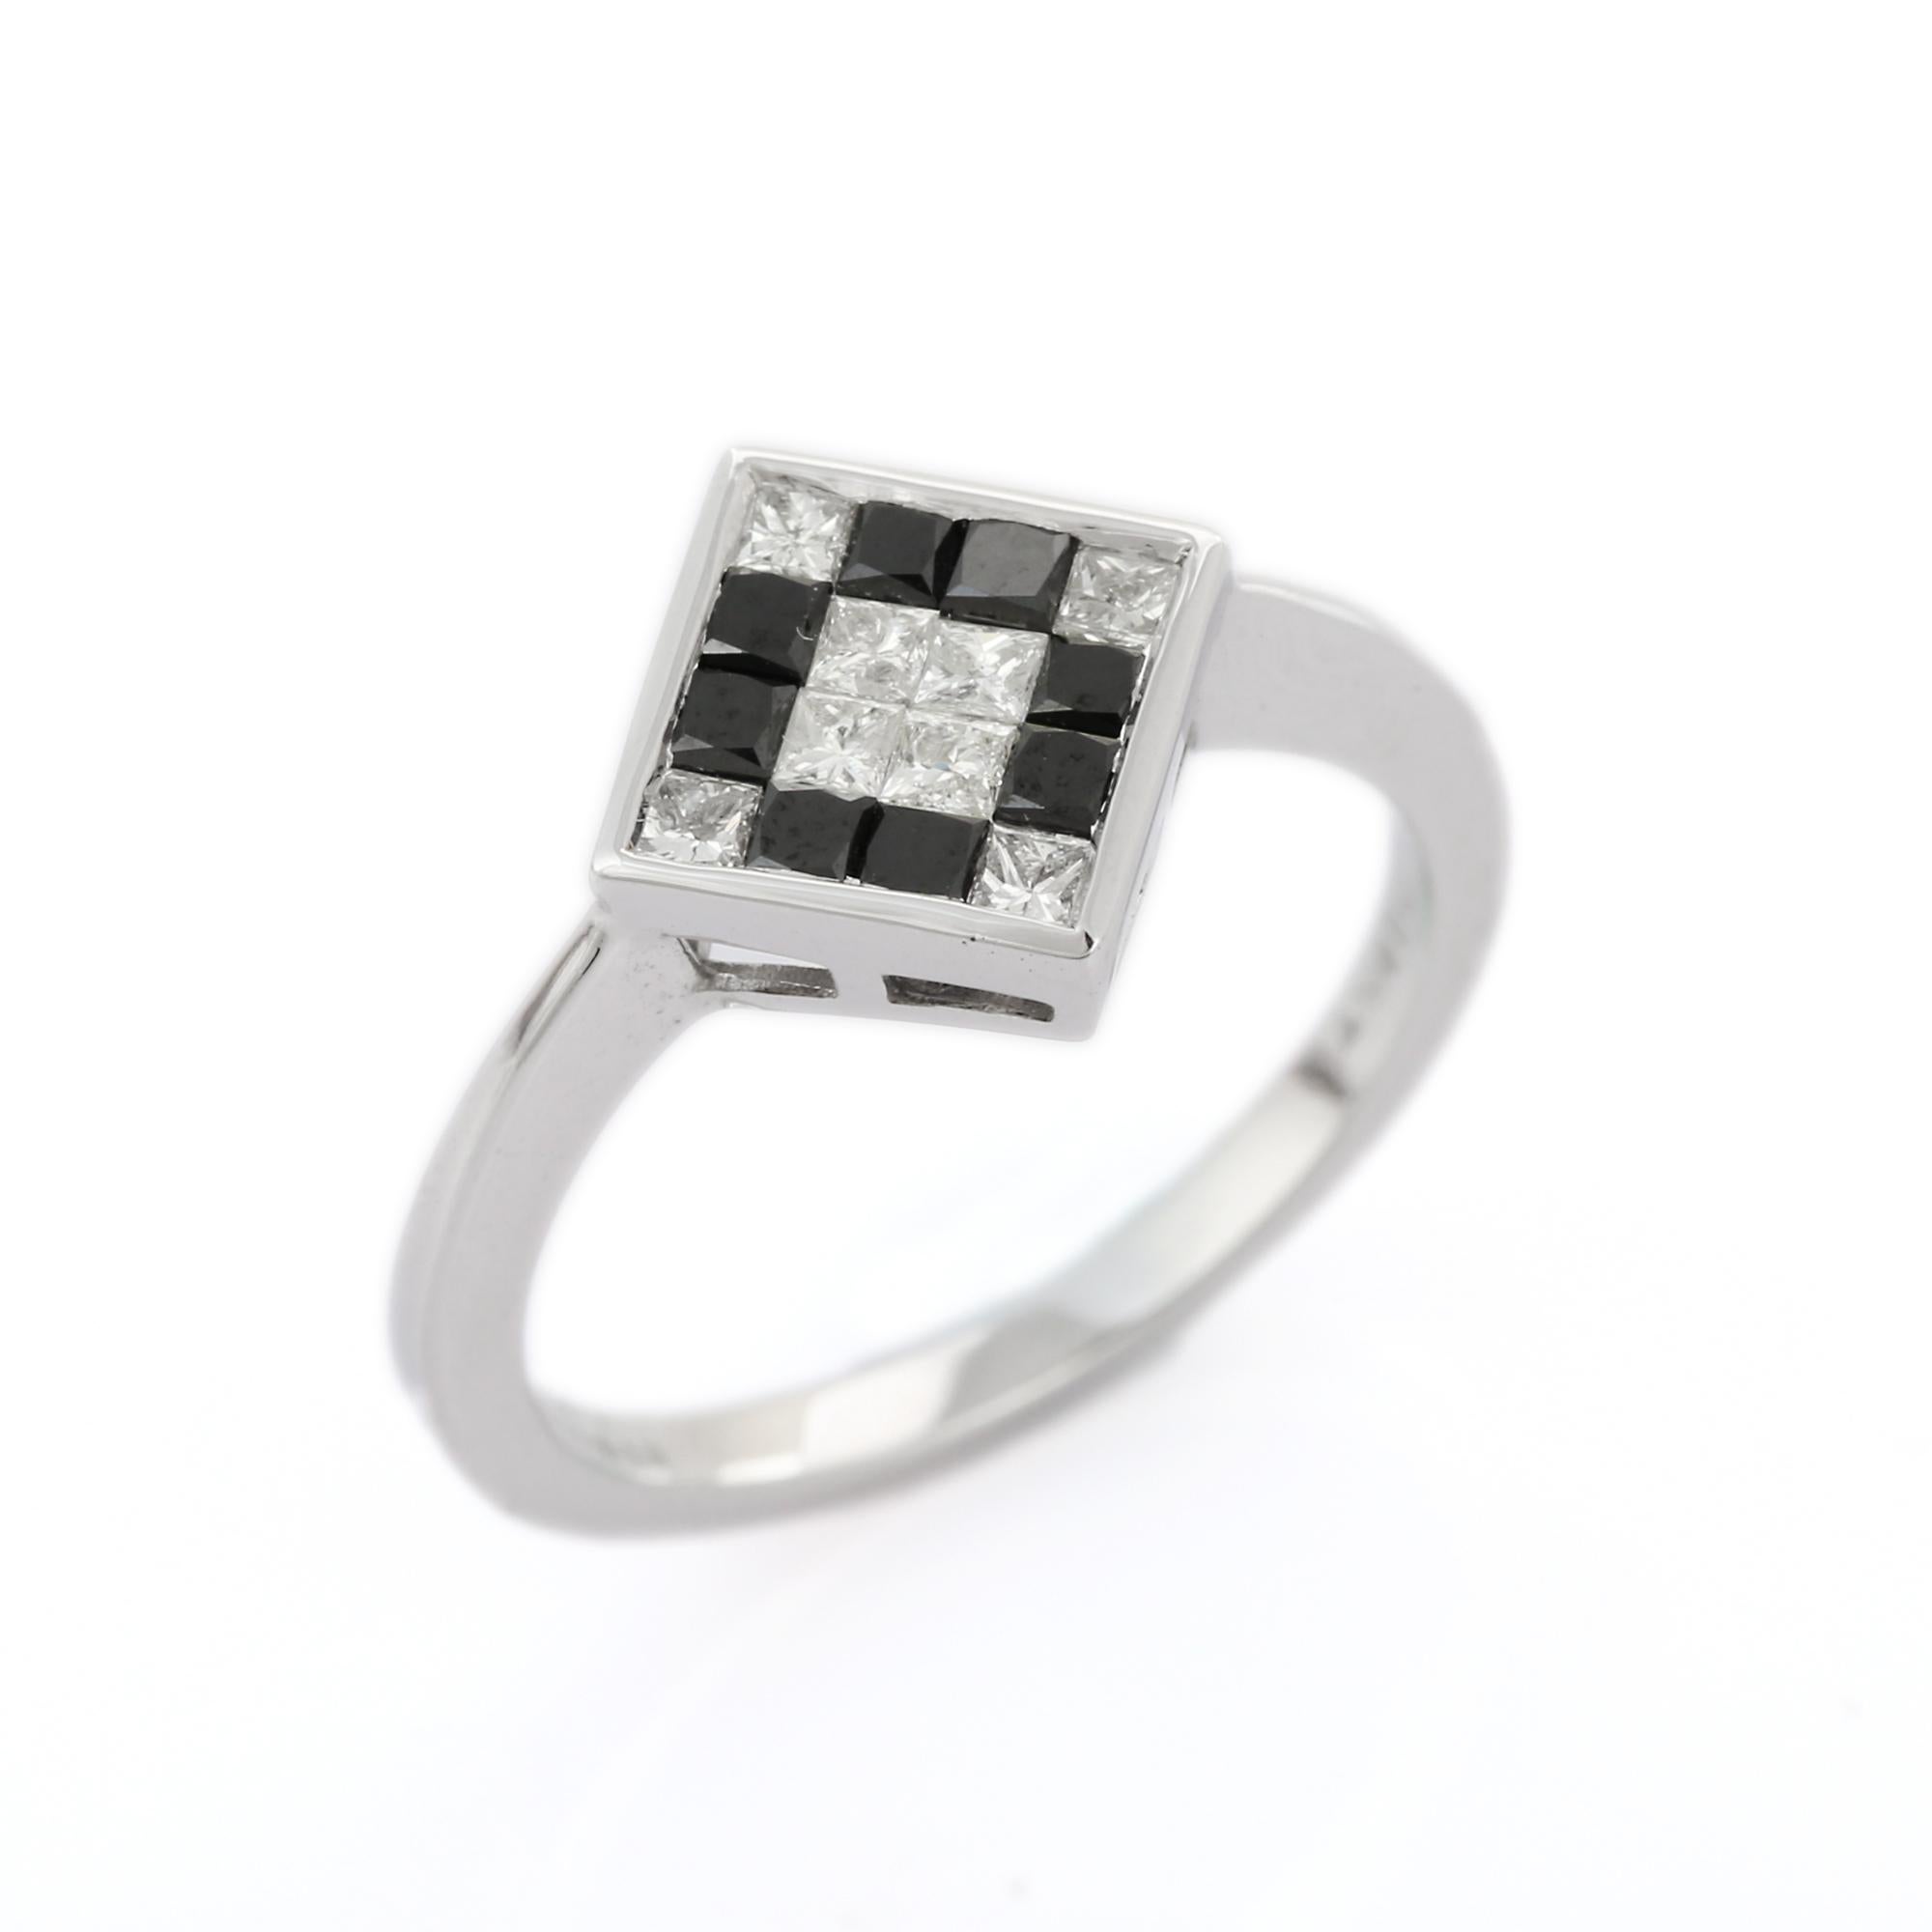 For Sale:  Art Deco Style Black White Diamond Square Ring in 18 Karat White Gold 7